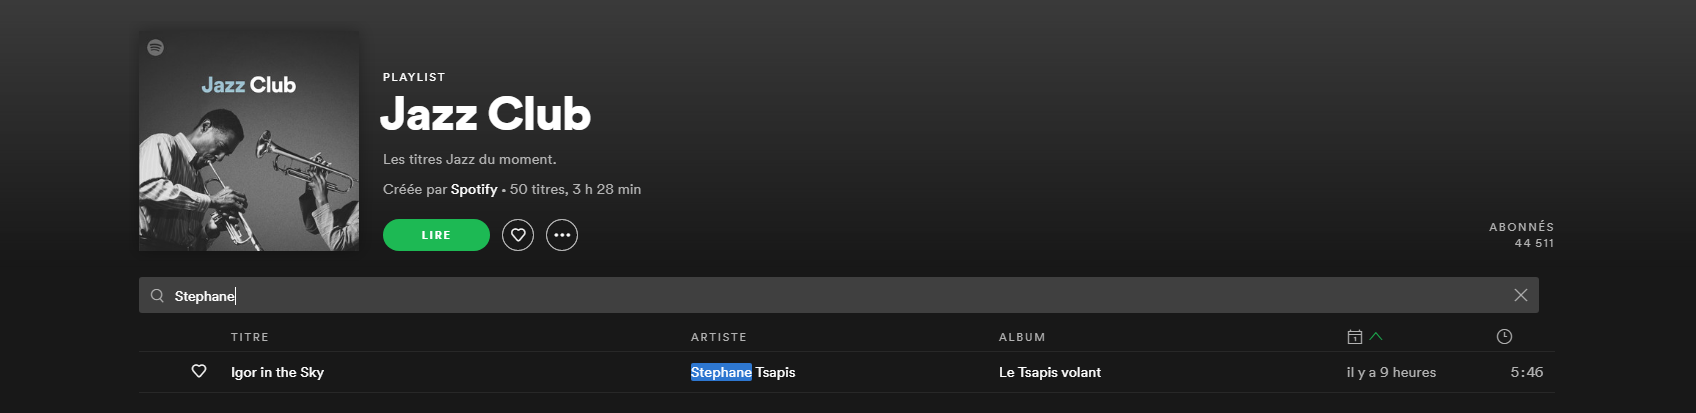 2020-01-17-Playlist-Spotify-Jazz-Club-Stephane-Tsapis-Le-Tsapis-Volant